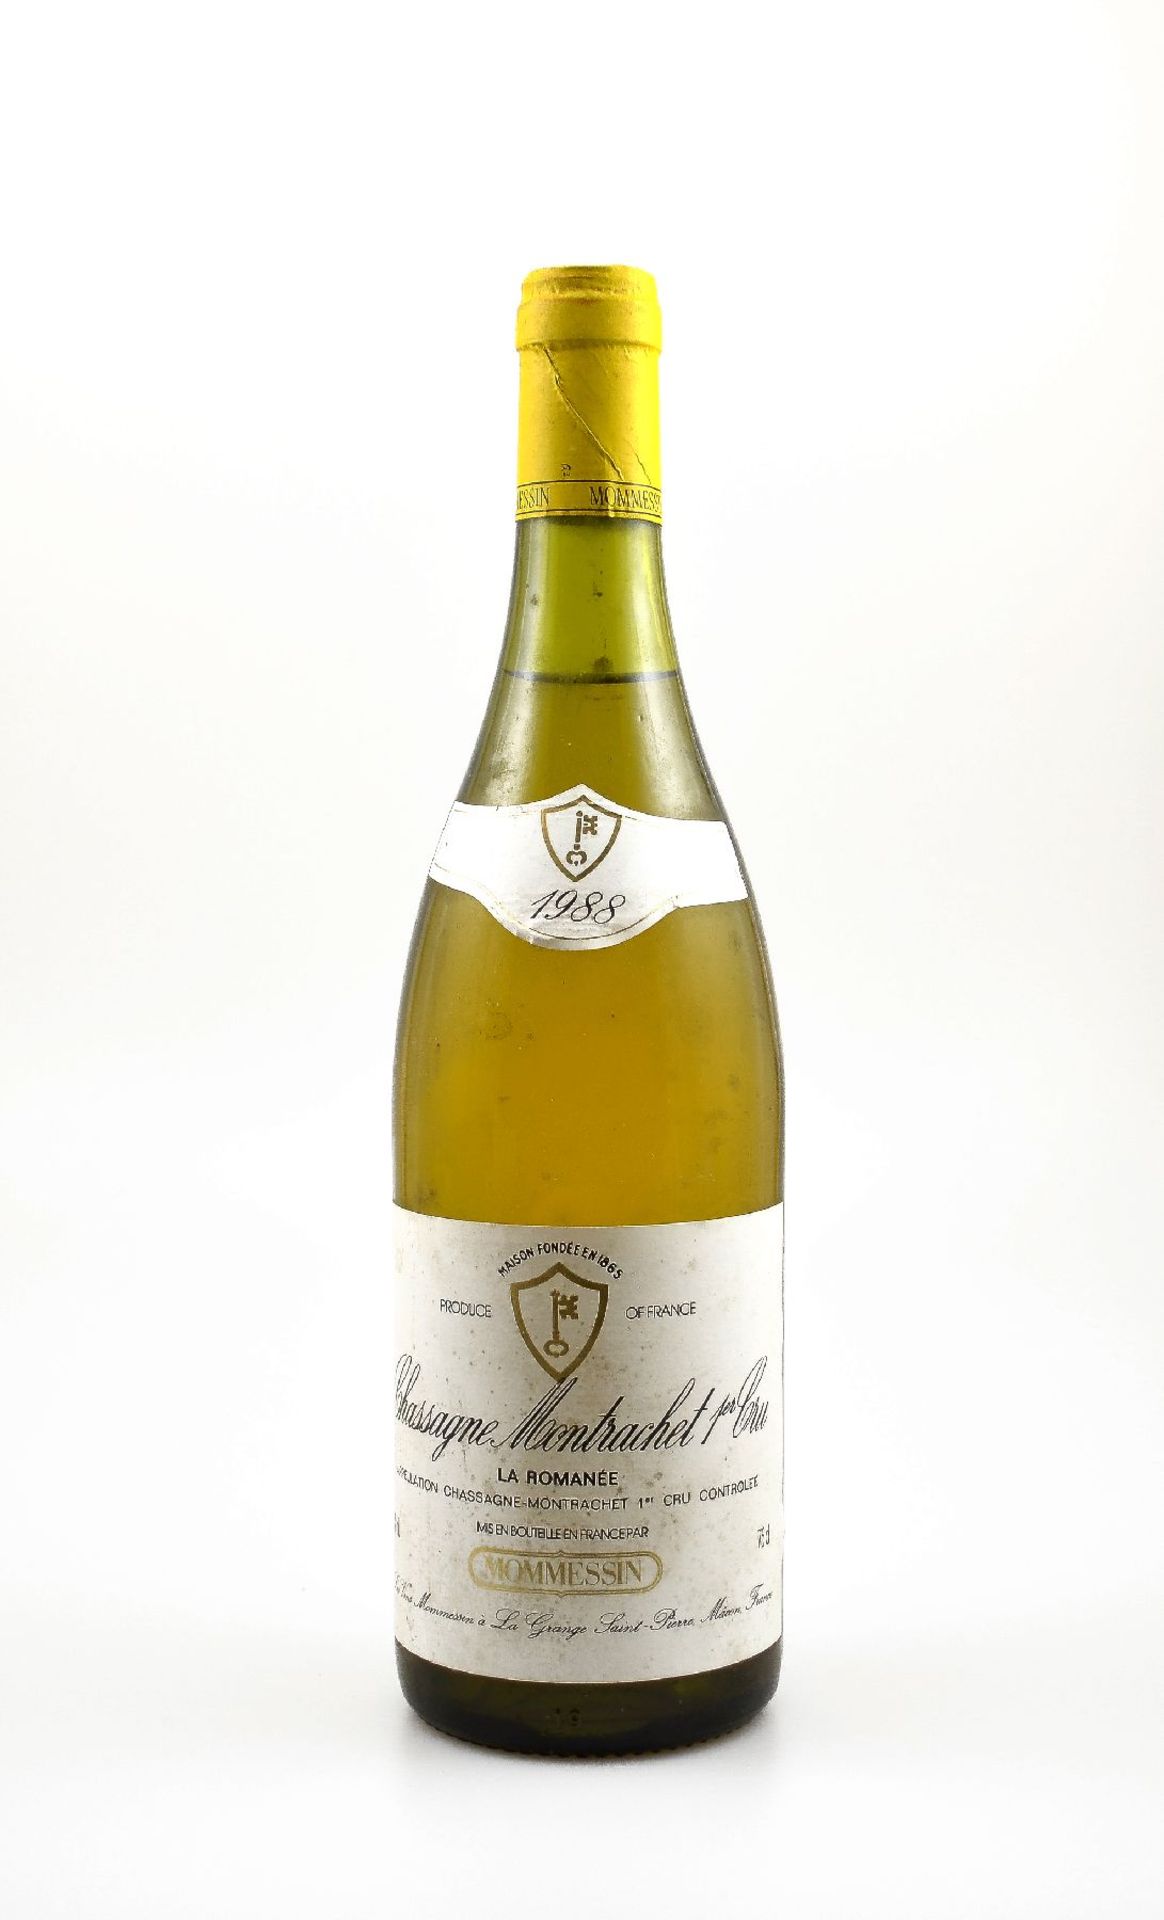 1 bottle 1988 Chassagne Montrachet La Romanee , Mommessin, approx 75 cl, 13 % Vol., distance between